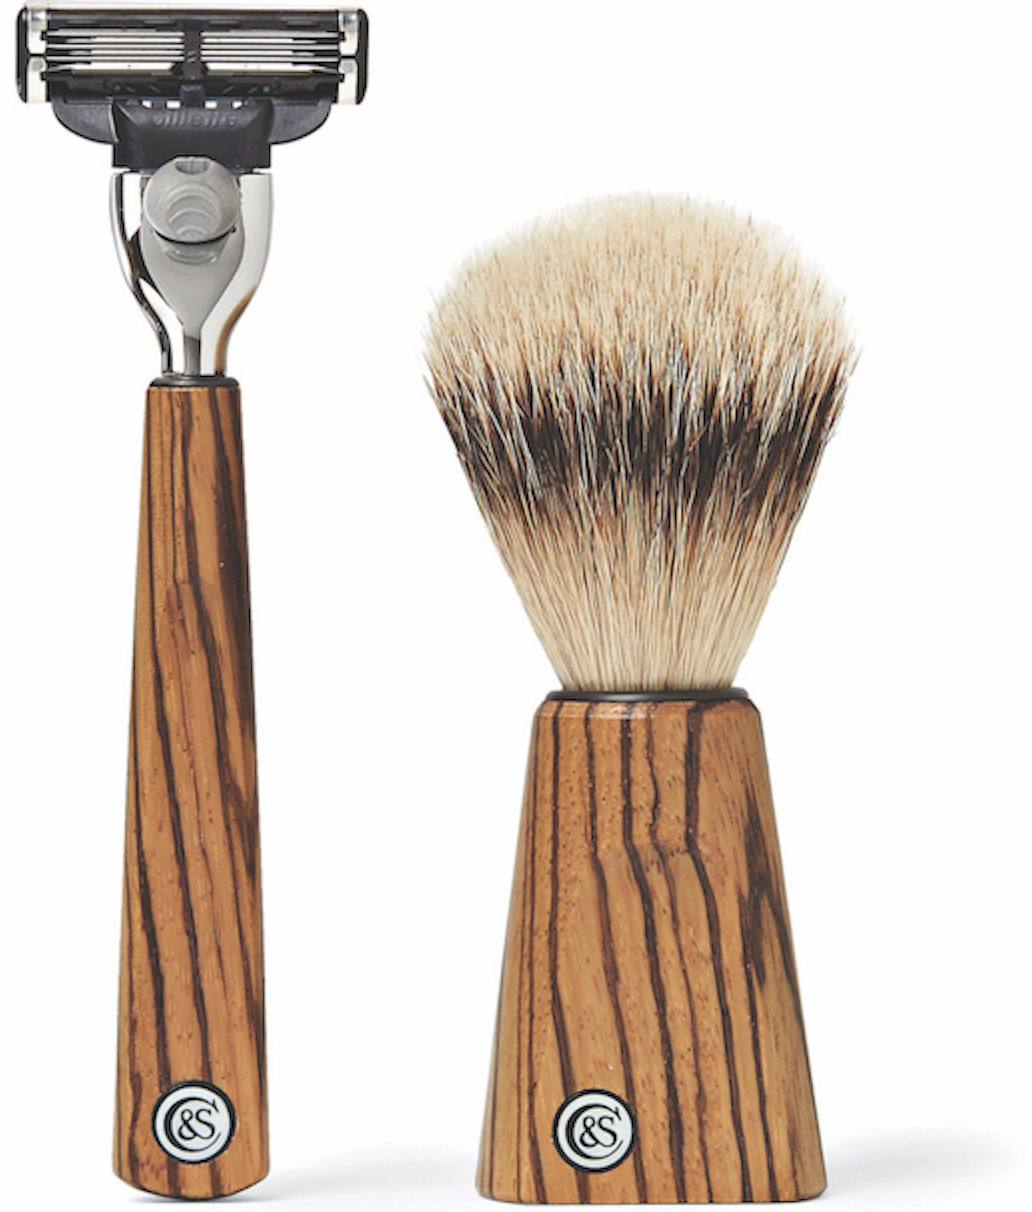 Czech & Speake zebrano wood shave set